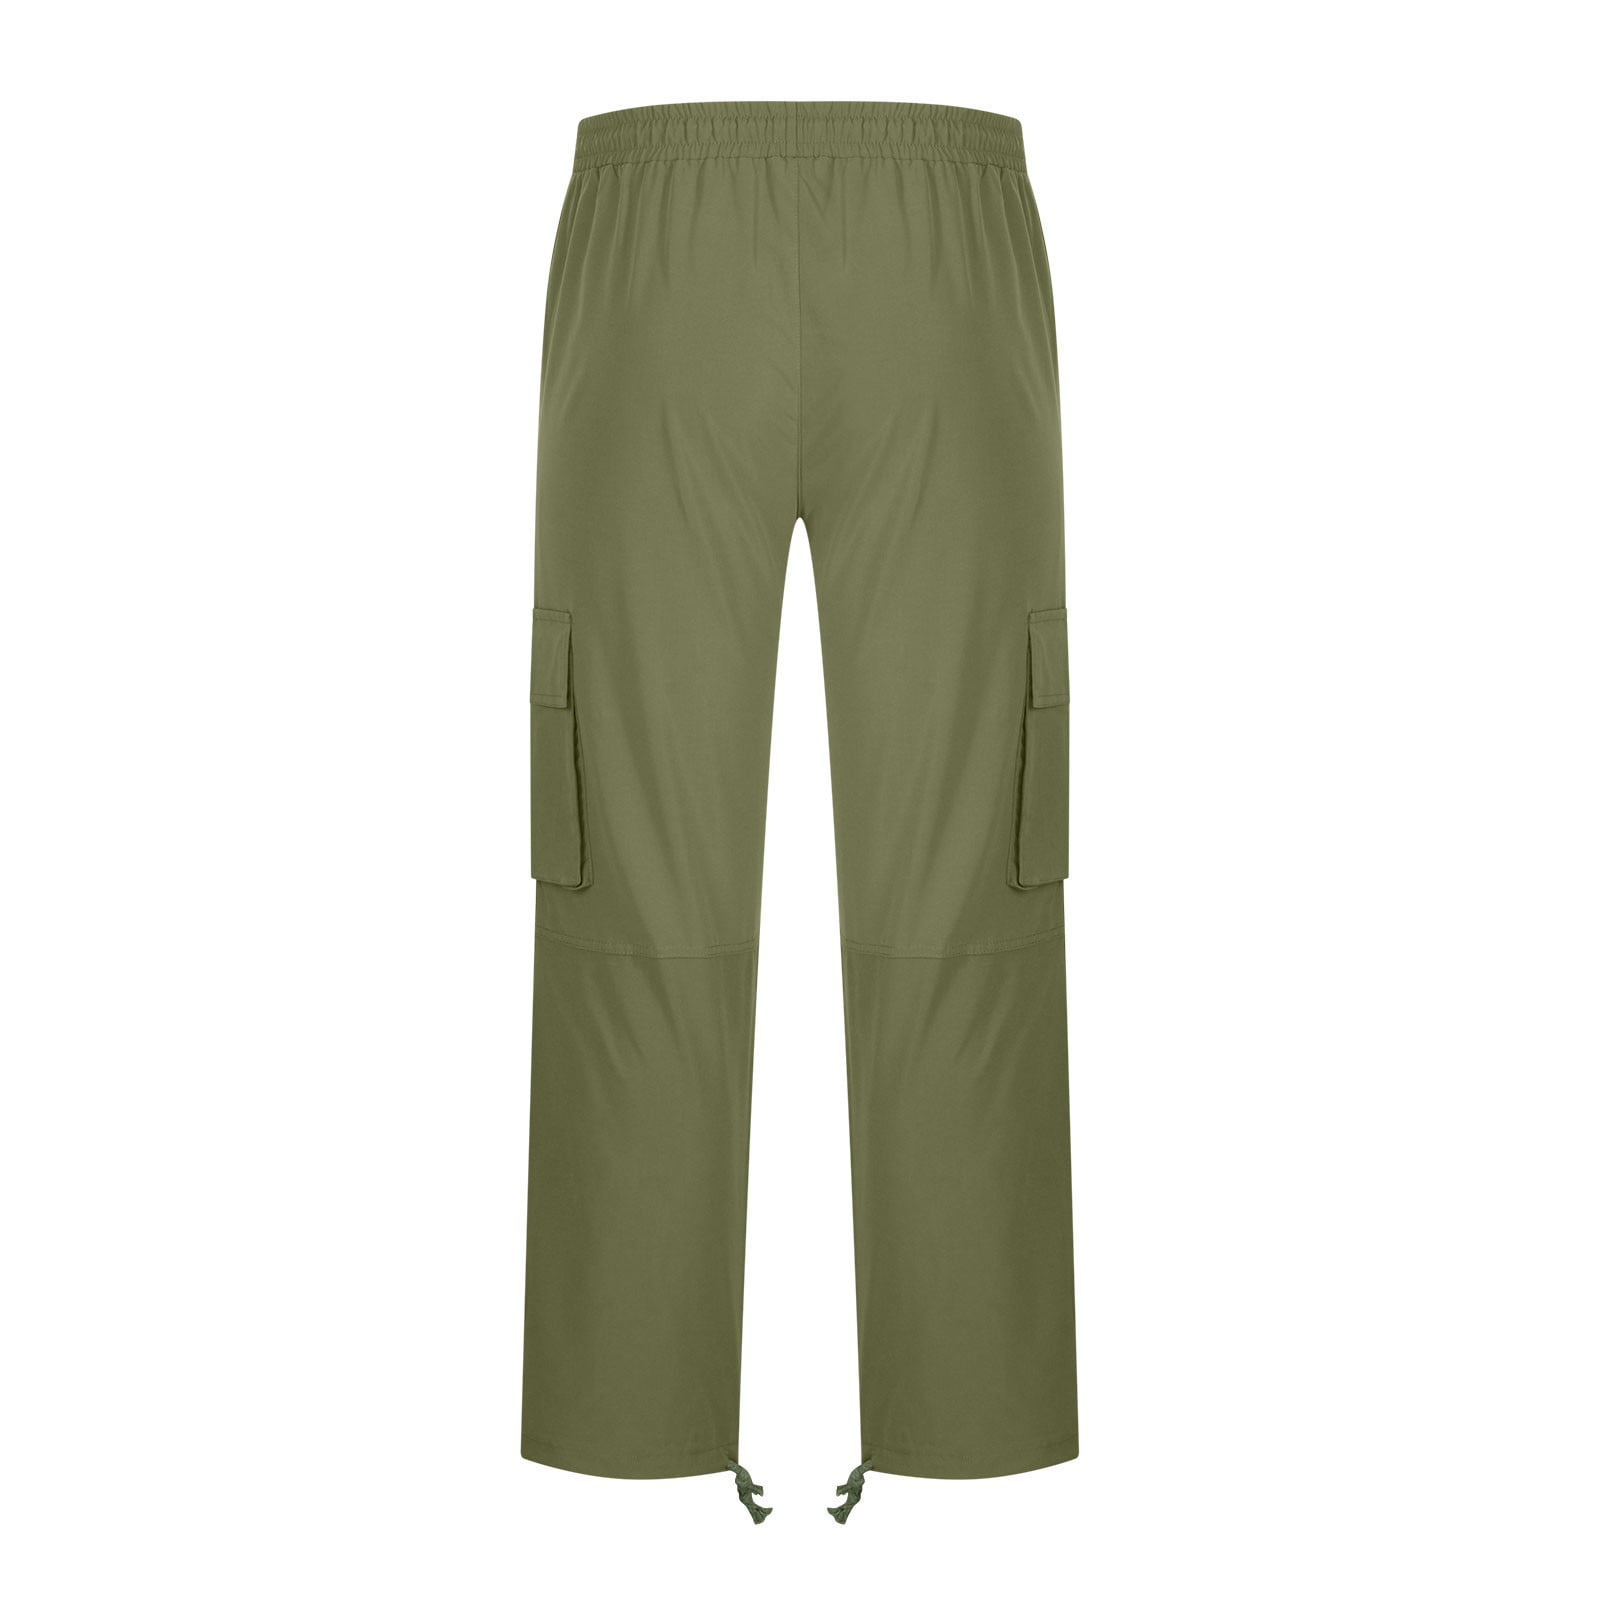  XIAXOGOOL Cargo Pants Man Big and Tall Mens Sweatpants Elastic  Waist Drawstring Tactical Pants Work Pants Ripstop Pants for Men with  Pockets Mens Joggers Army Green M : Sports & Outdoors